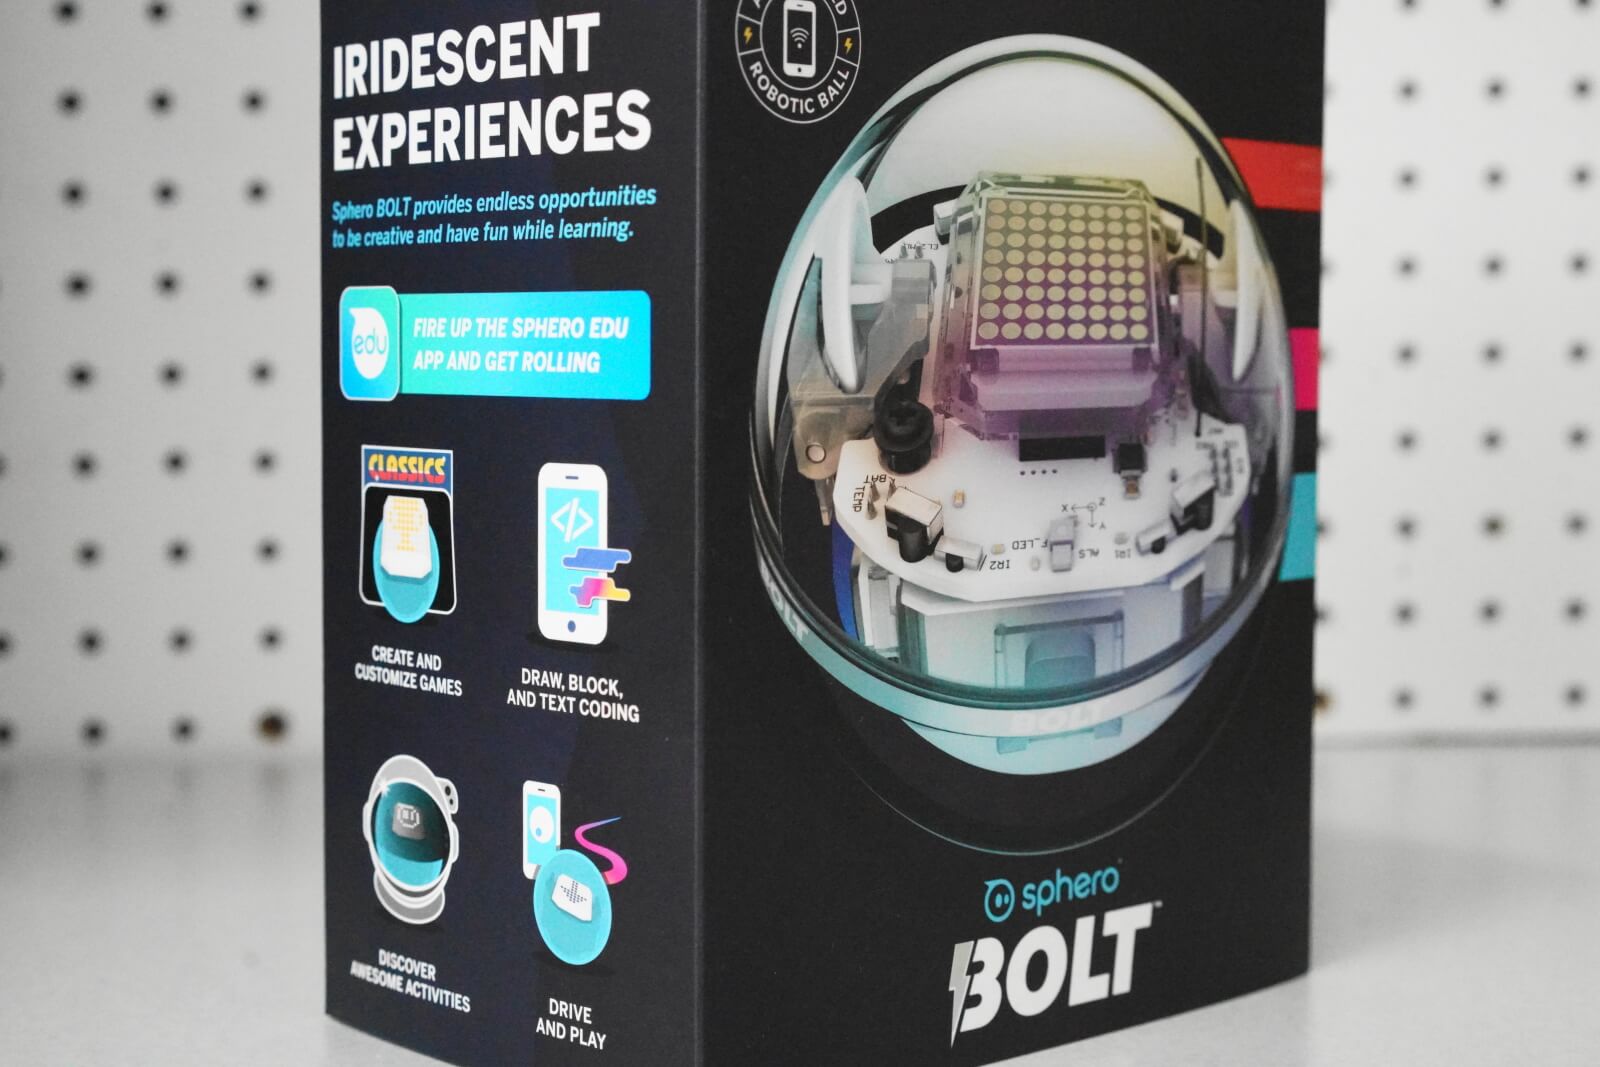 the sphero bolt robot box